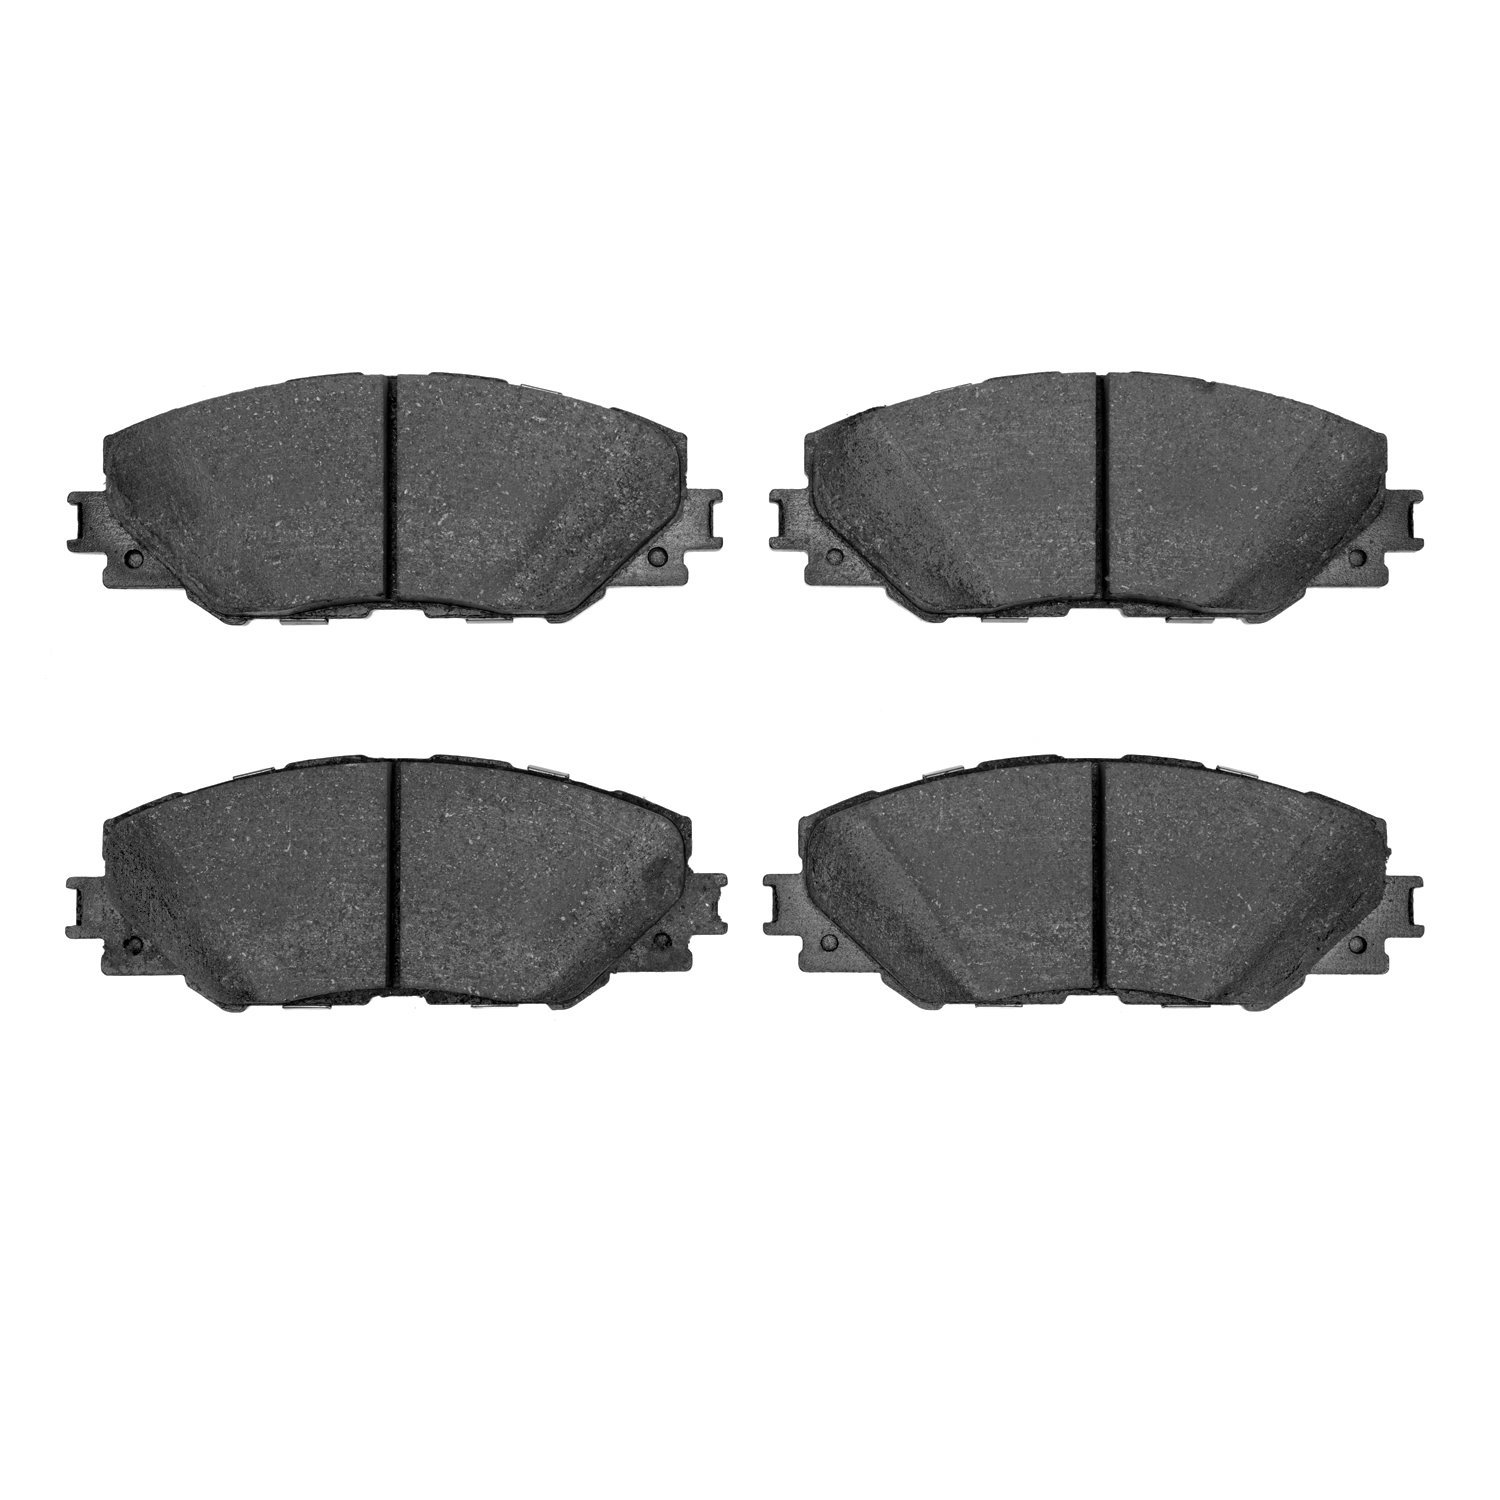 Optimum OE Brake Pads, 2006-2020 Fits Multiple Makes/Models, Position: Front